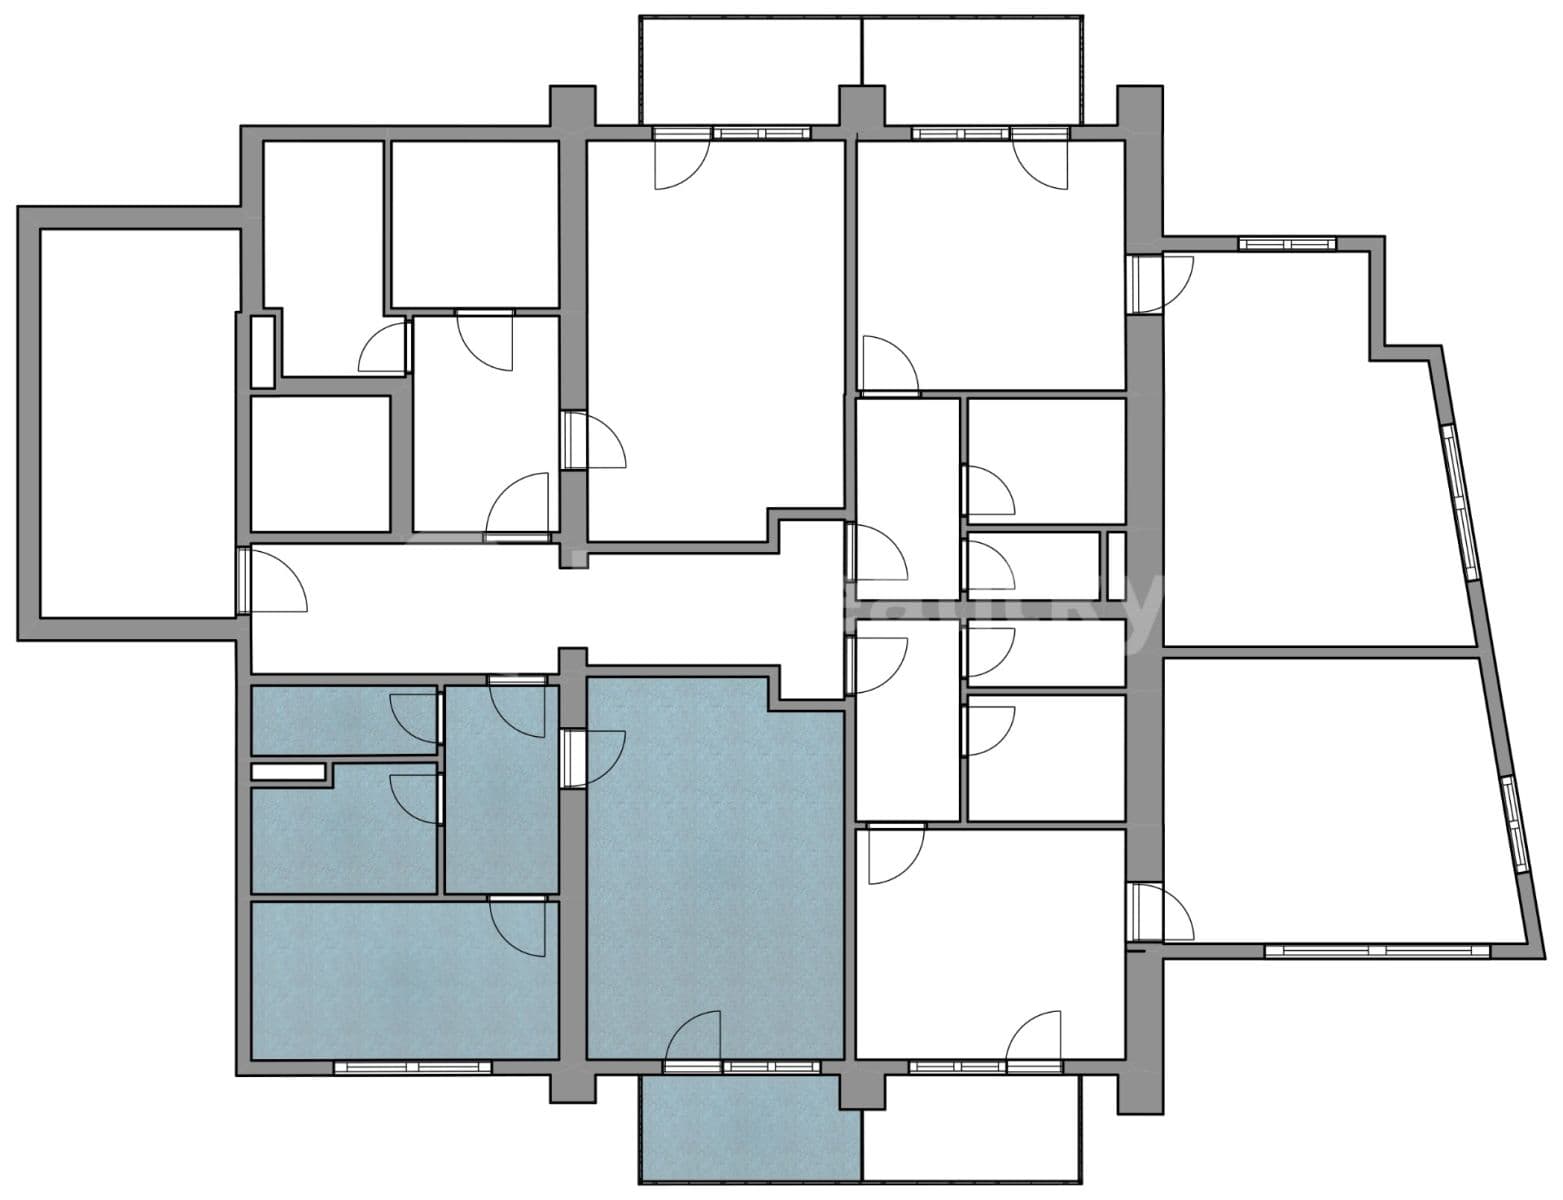 1 bedroom with open-plan kitchen flat for sale, 38 m², Mládí, Jablonec nad Nisou, Liberecký Region